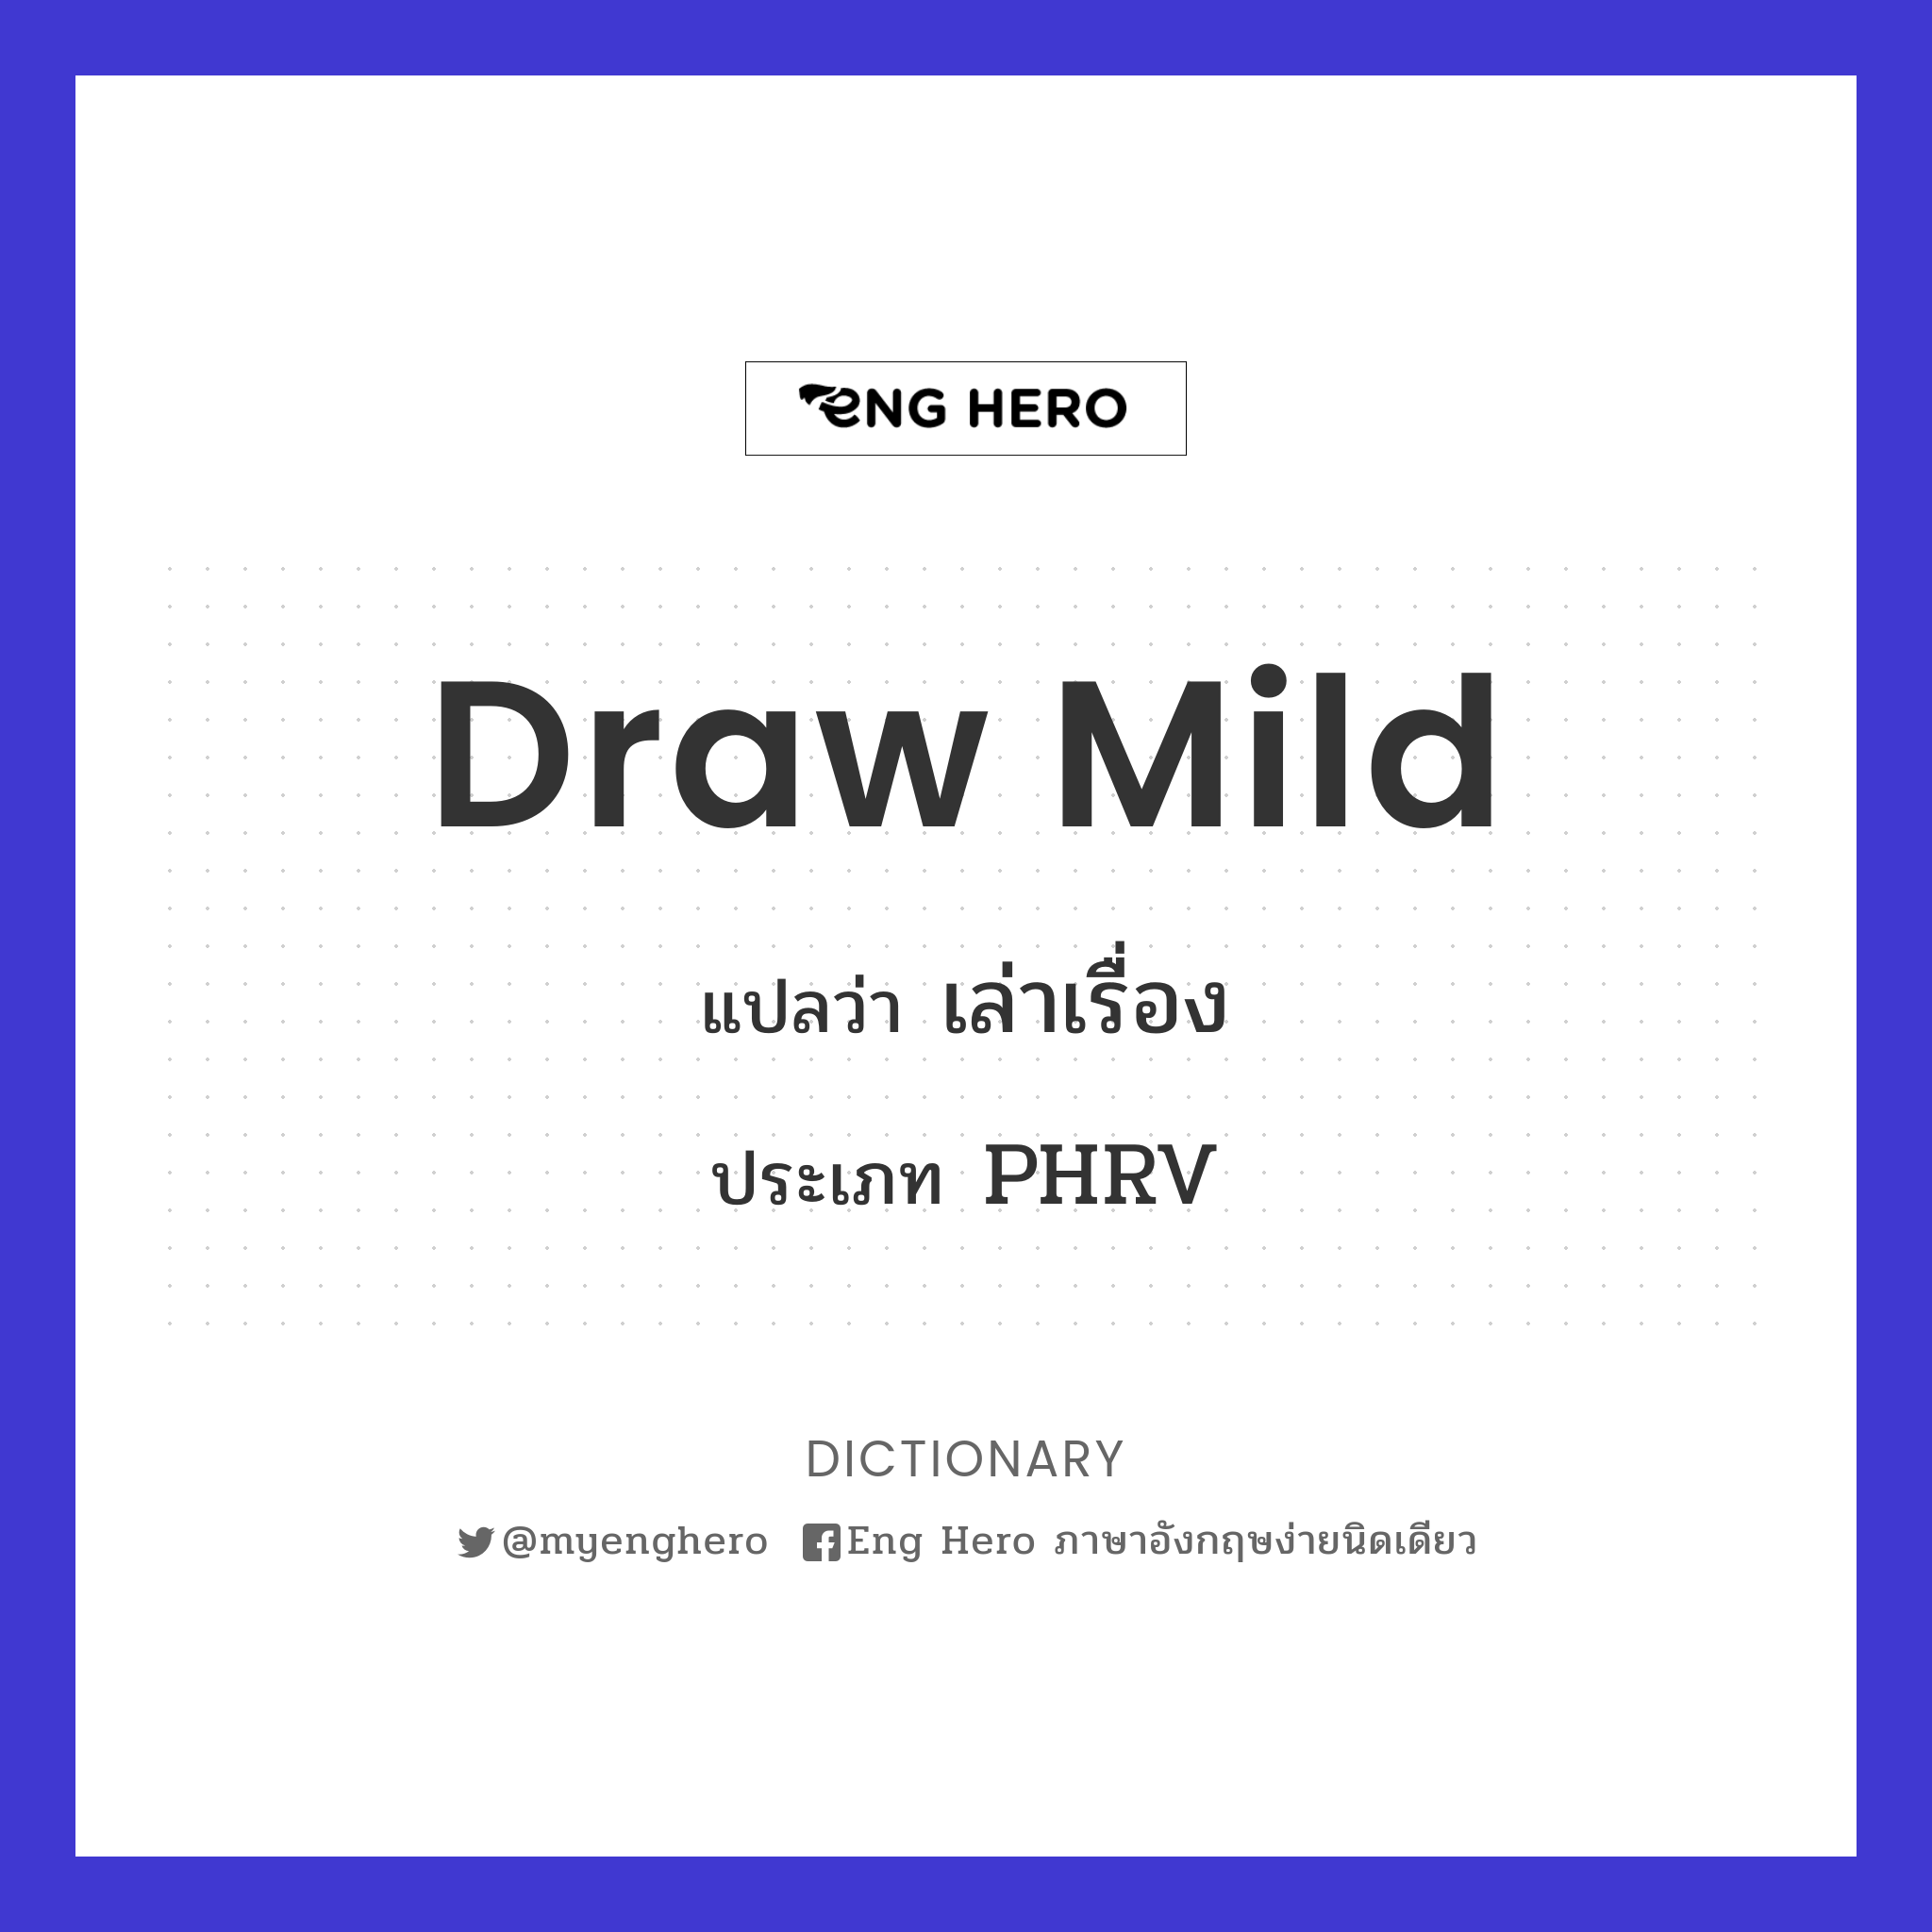 draw mild